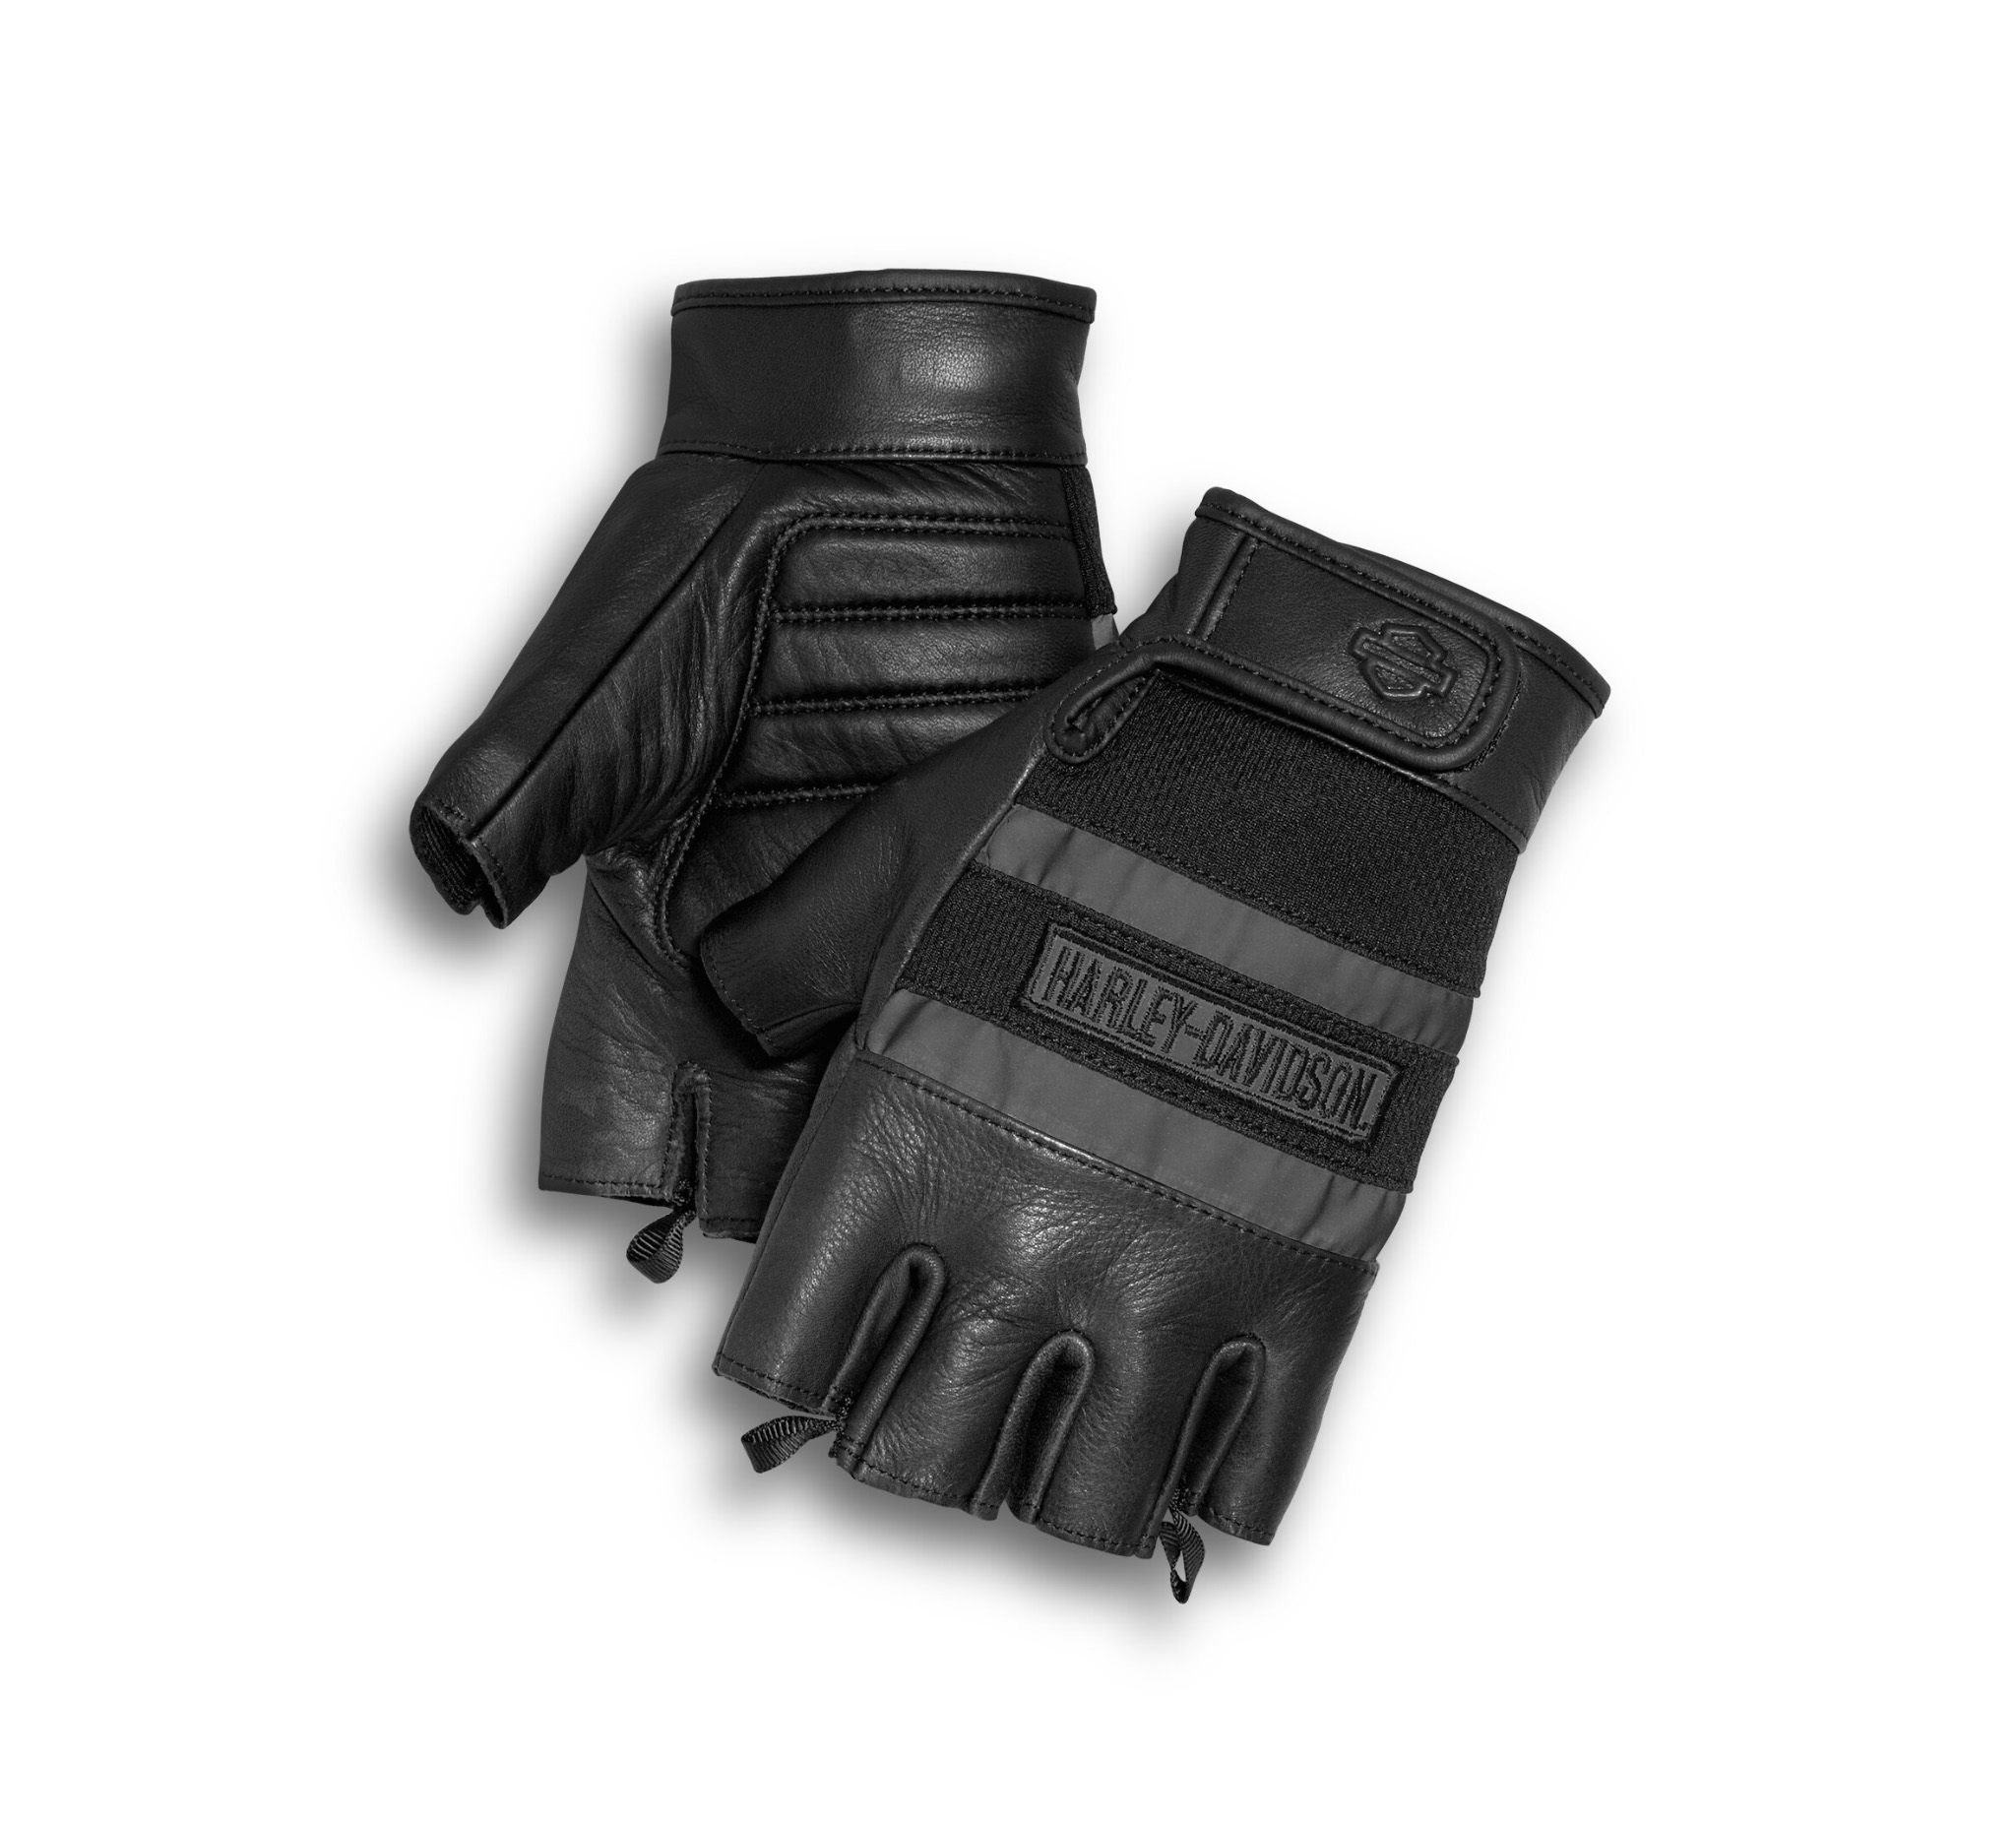 Harley Davidson Fingerless Motorcycle Gloves Promotion Off54